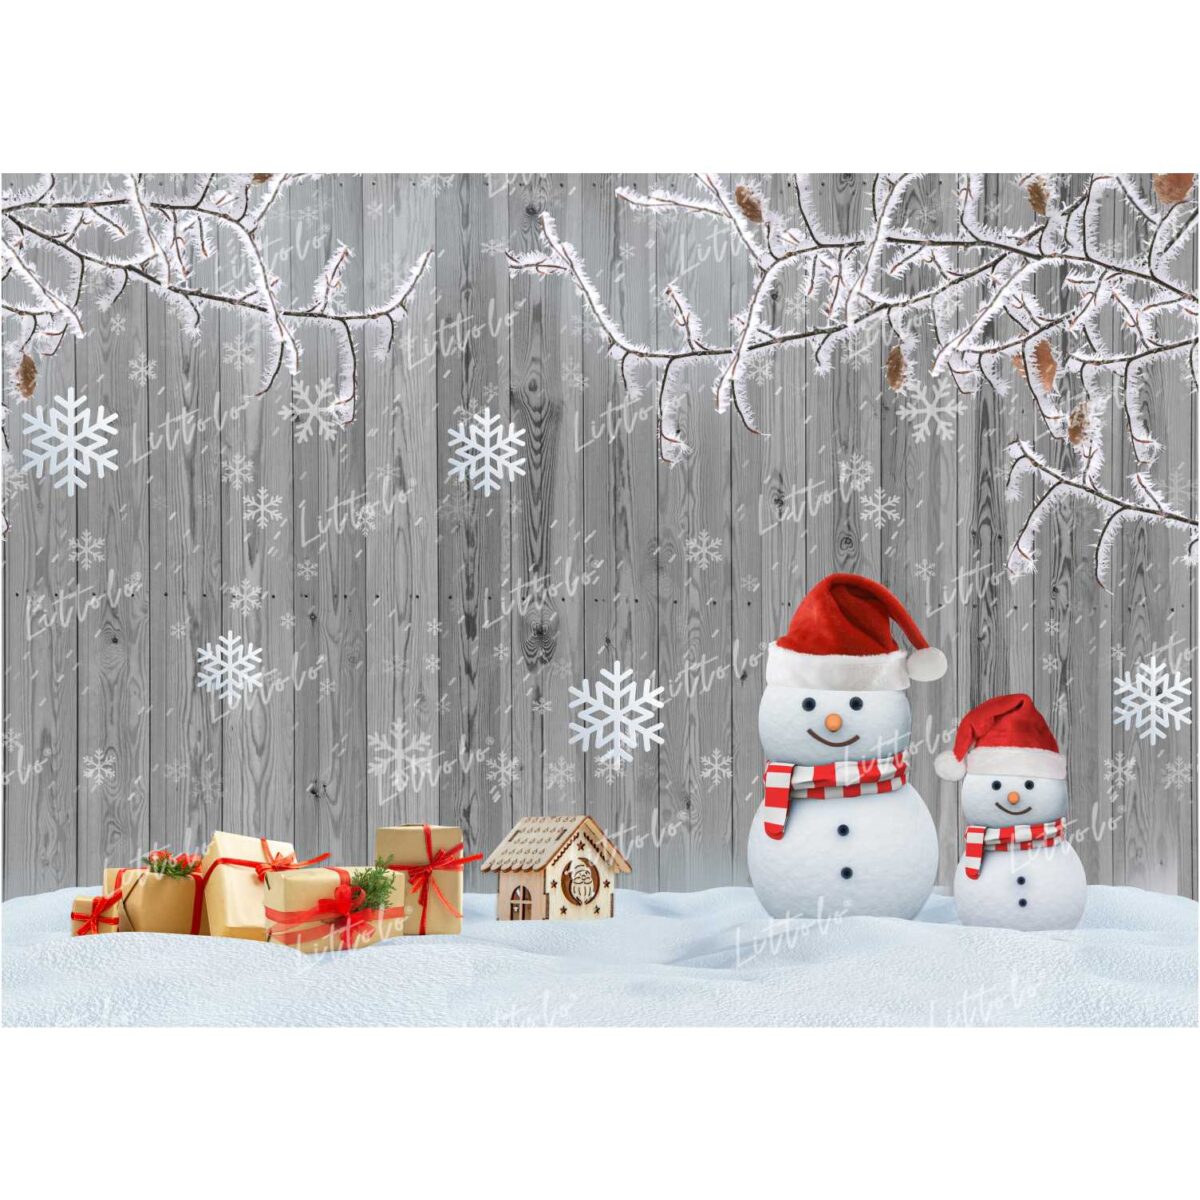 LB0018 Christmas Snowman Outdoors Theme Backdrop